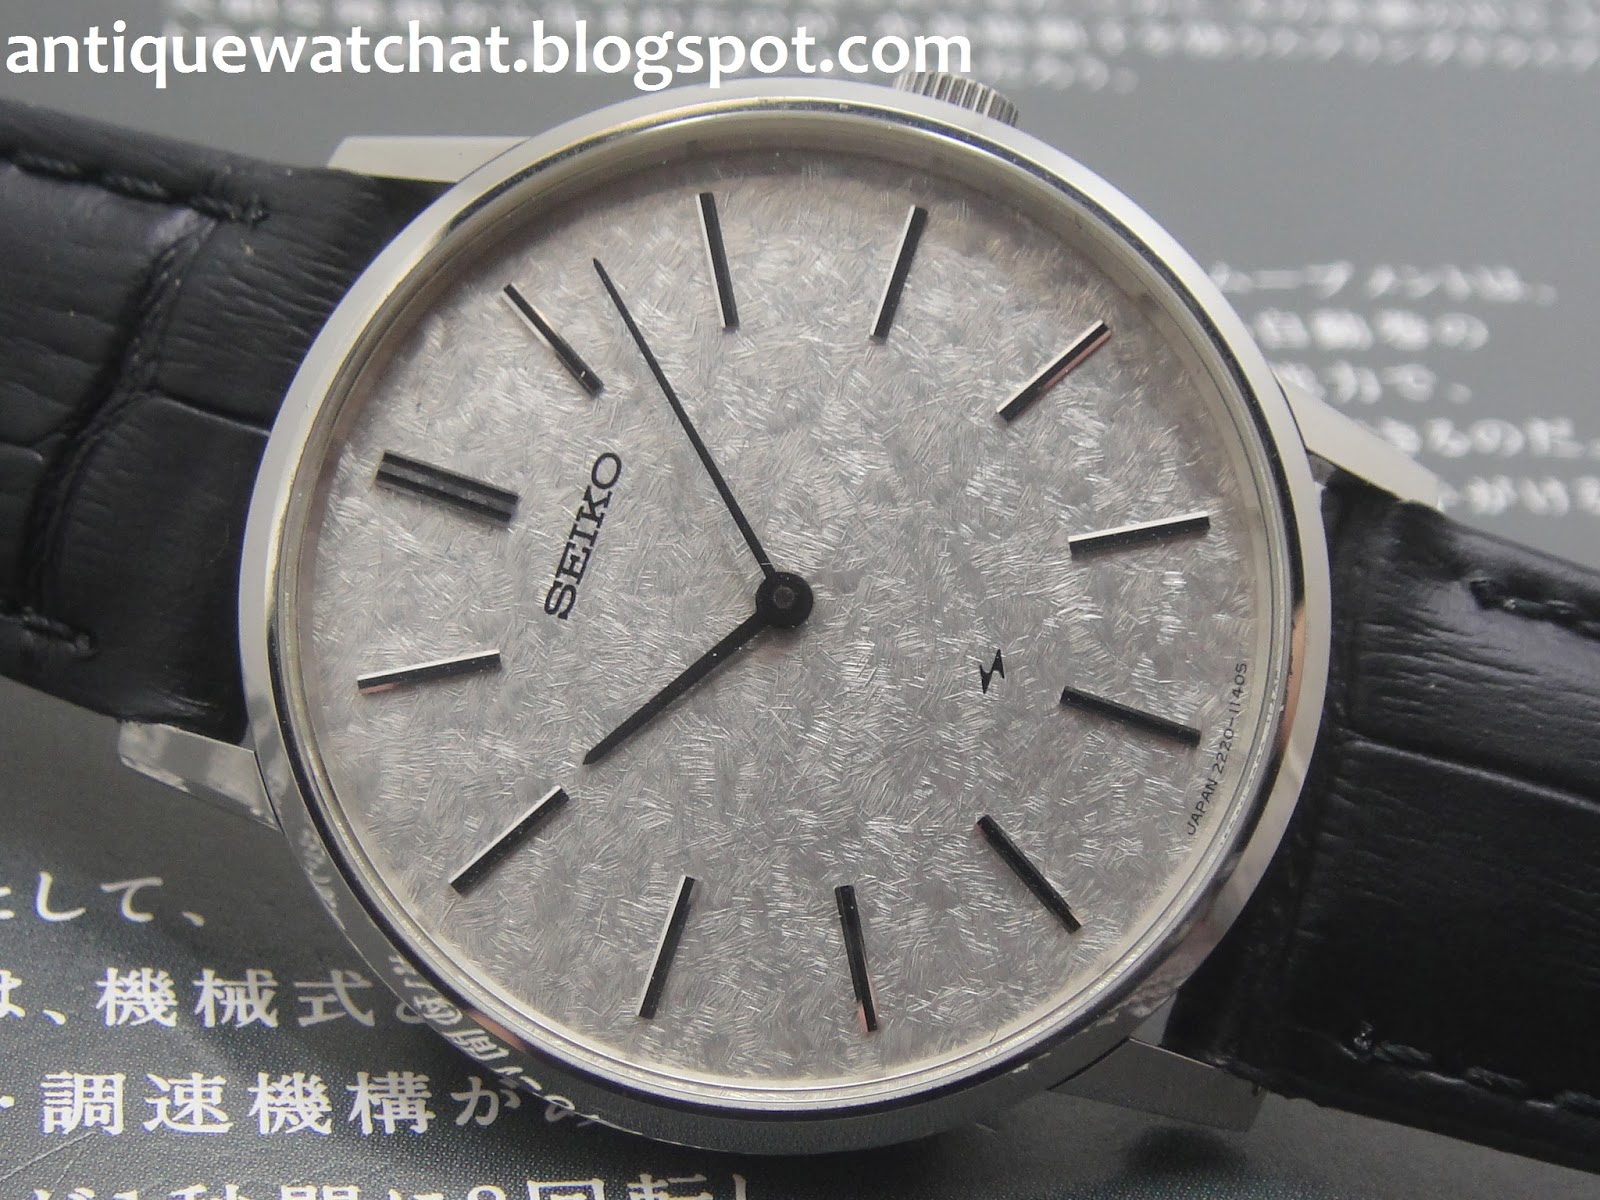 Antique Watch Bar: SEIKO MANUAL WINDING 2220-0430 SMW24 (SOLD)